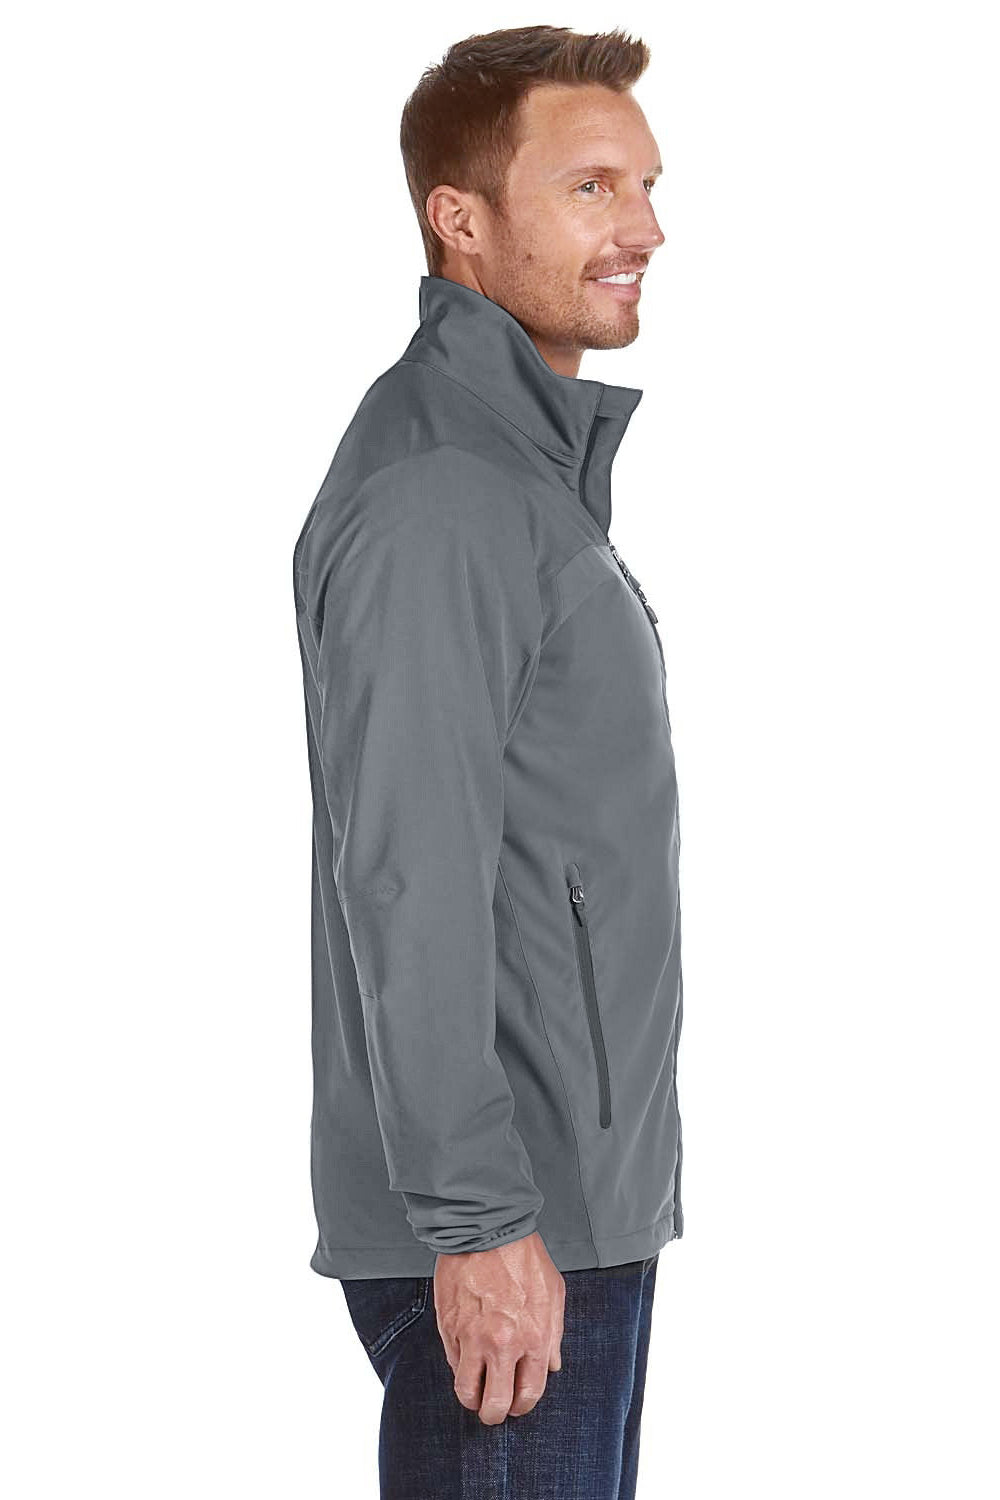 Marmot 98260 Mens Tempo Water Resistant Full Zip Jacket Cinder Grey SIde